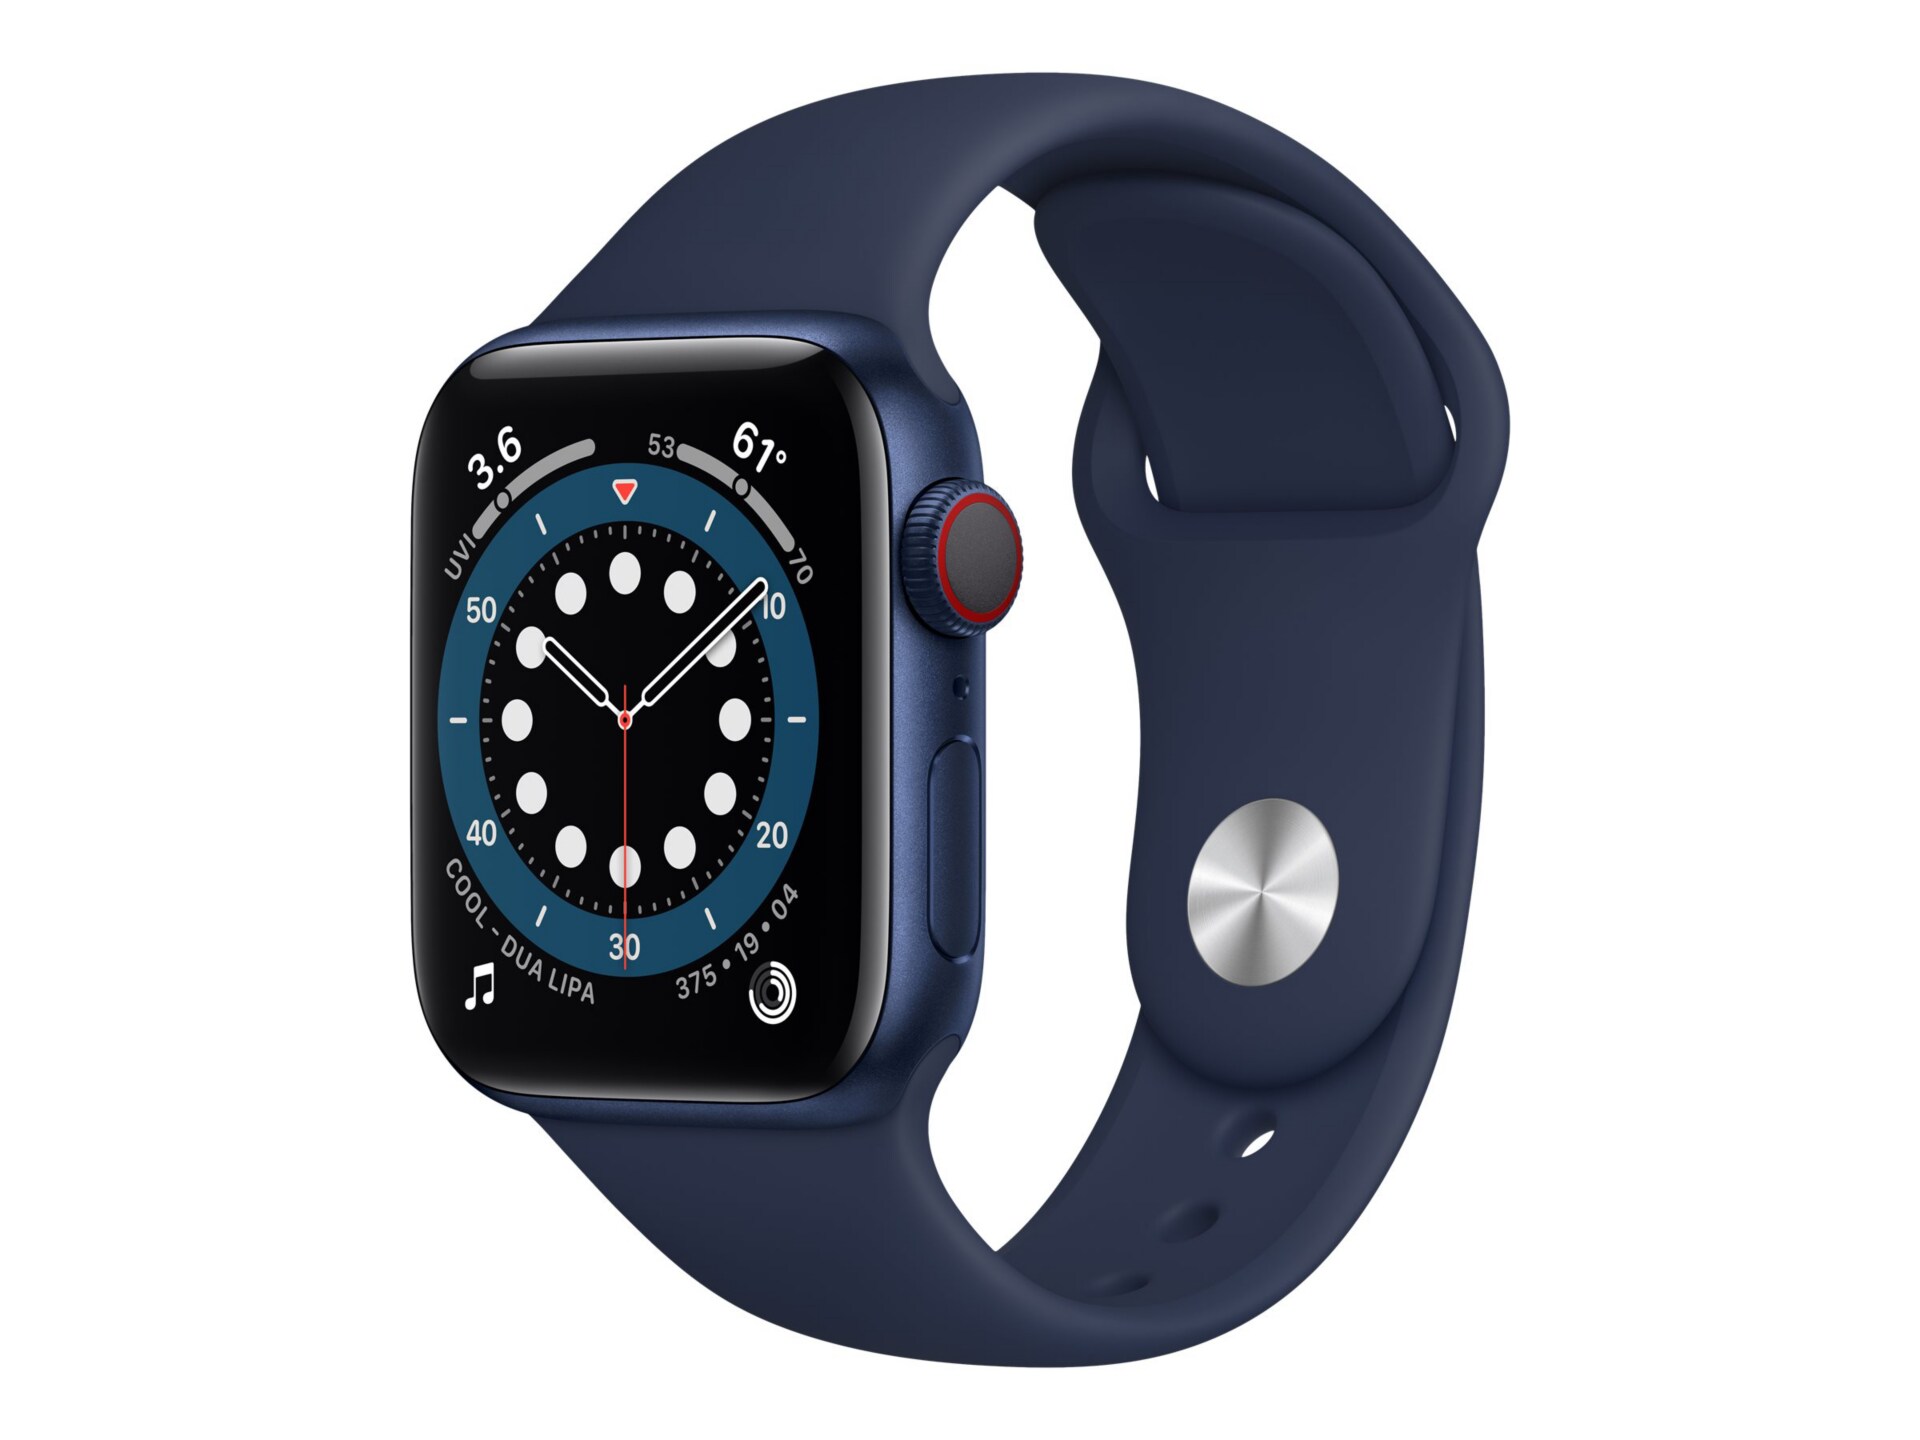 Apple Watch Series 6 (GPS + Cellular) - blue aluminum - smart watch with sp